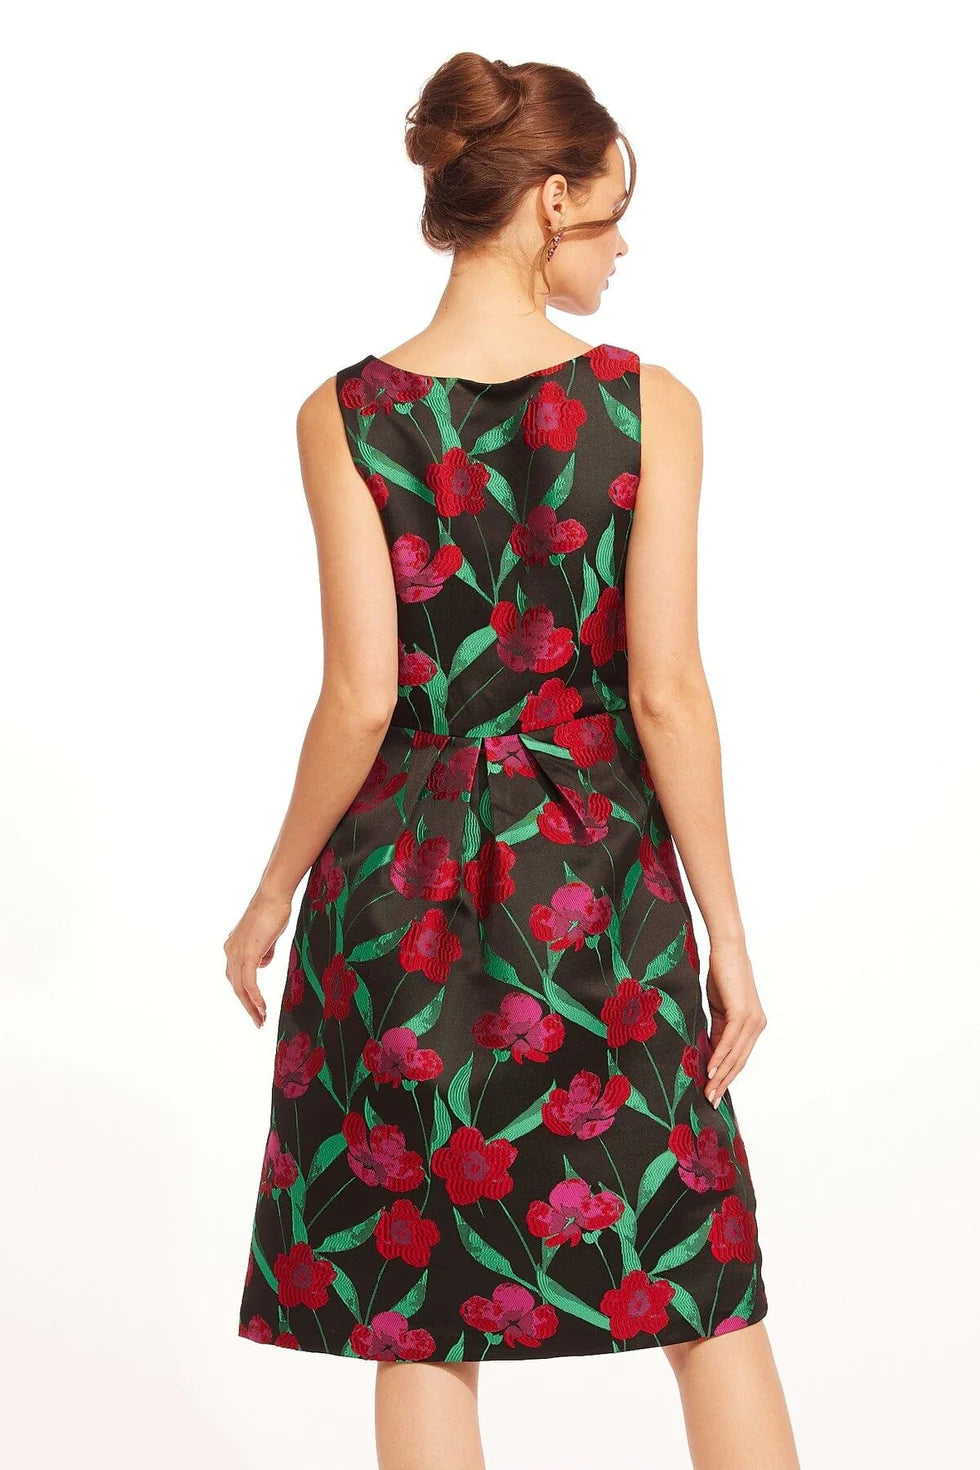 Eva Franco Alexa Roses & Thorn Dress